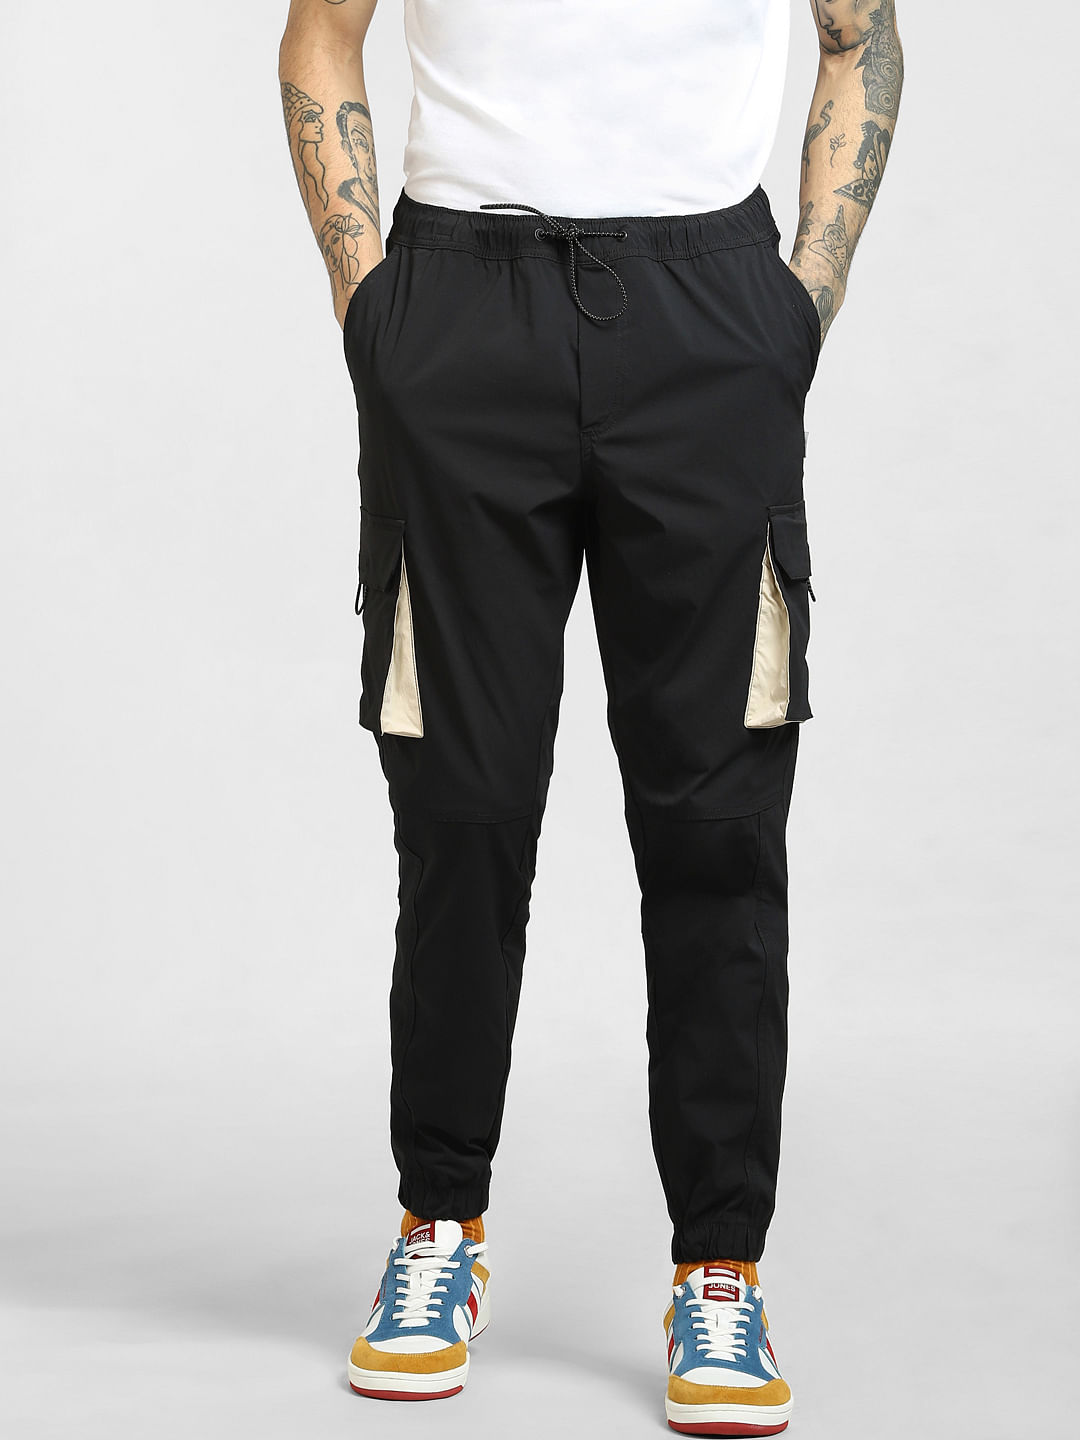 MNML Men's Drawstring Orange Camo Pants Zipper Bottom Size Medium |  eBay